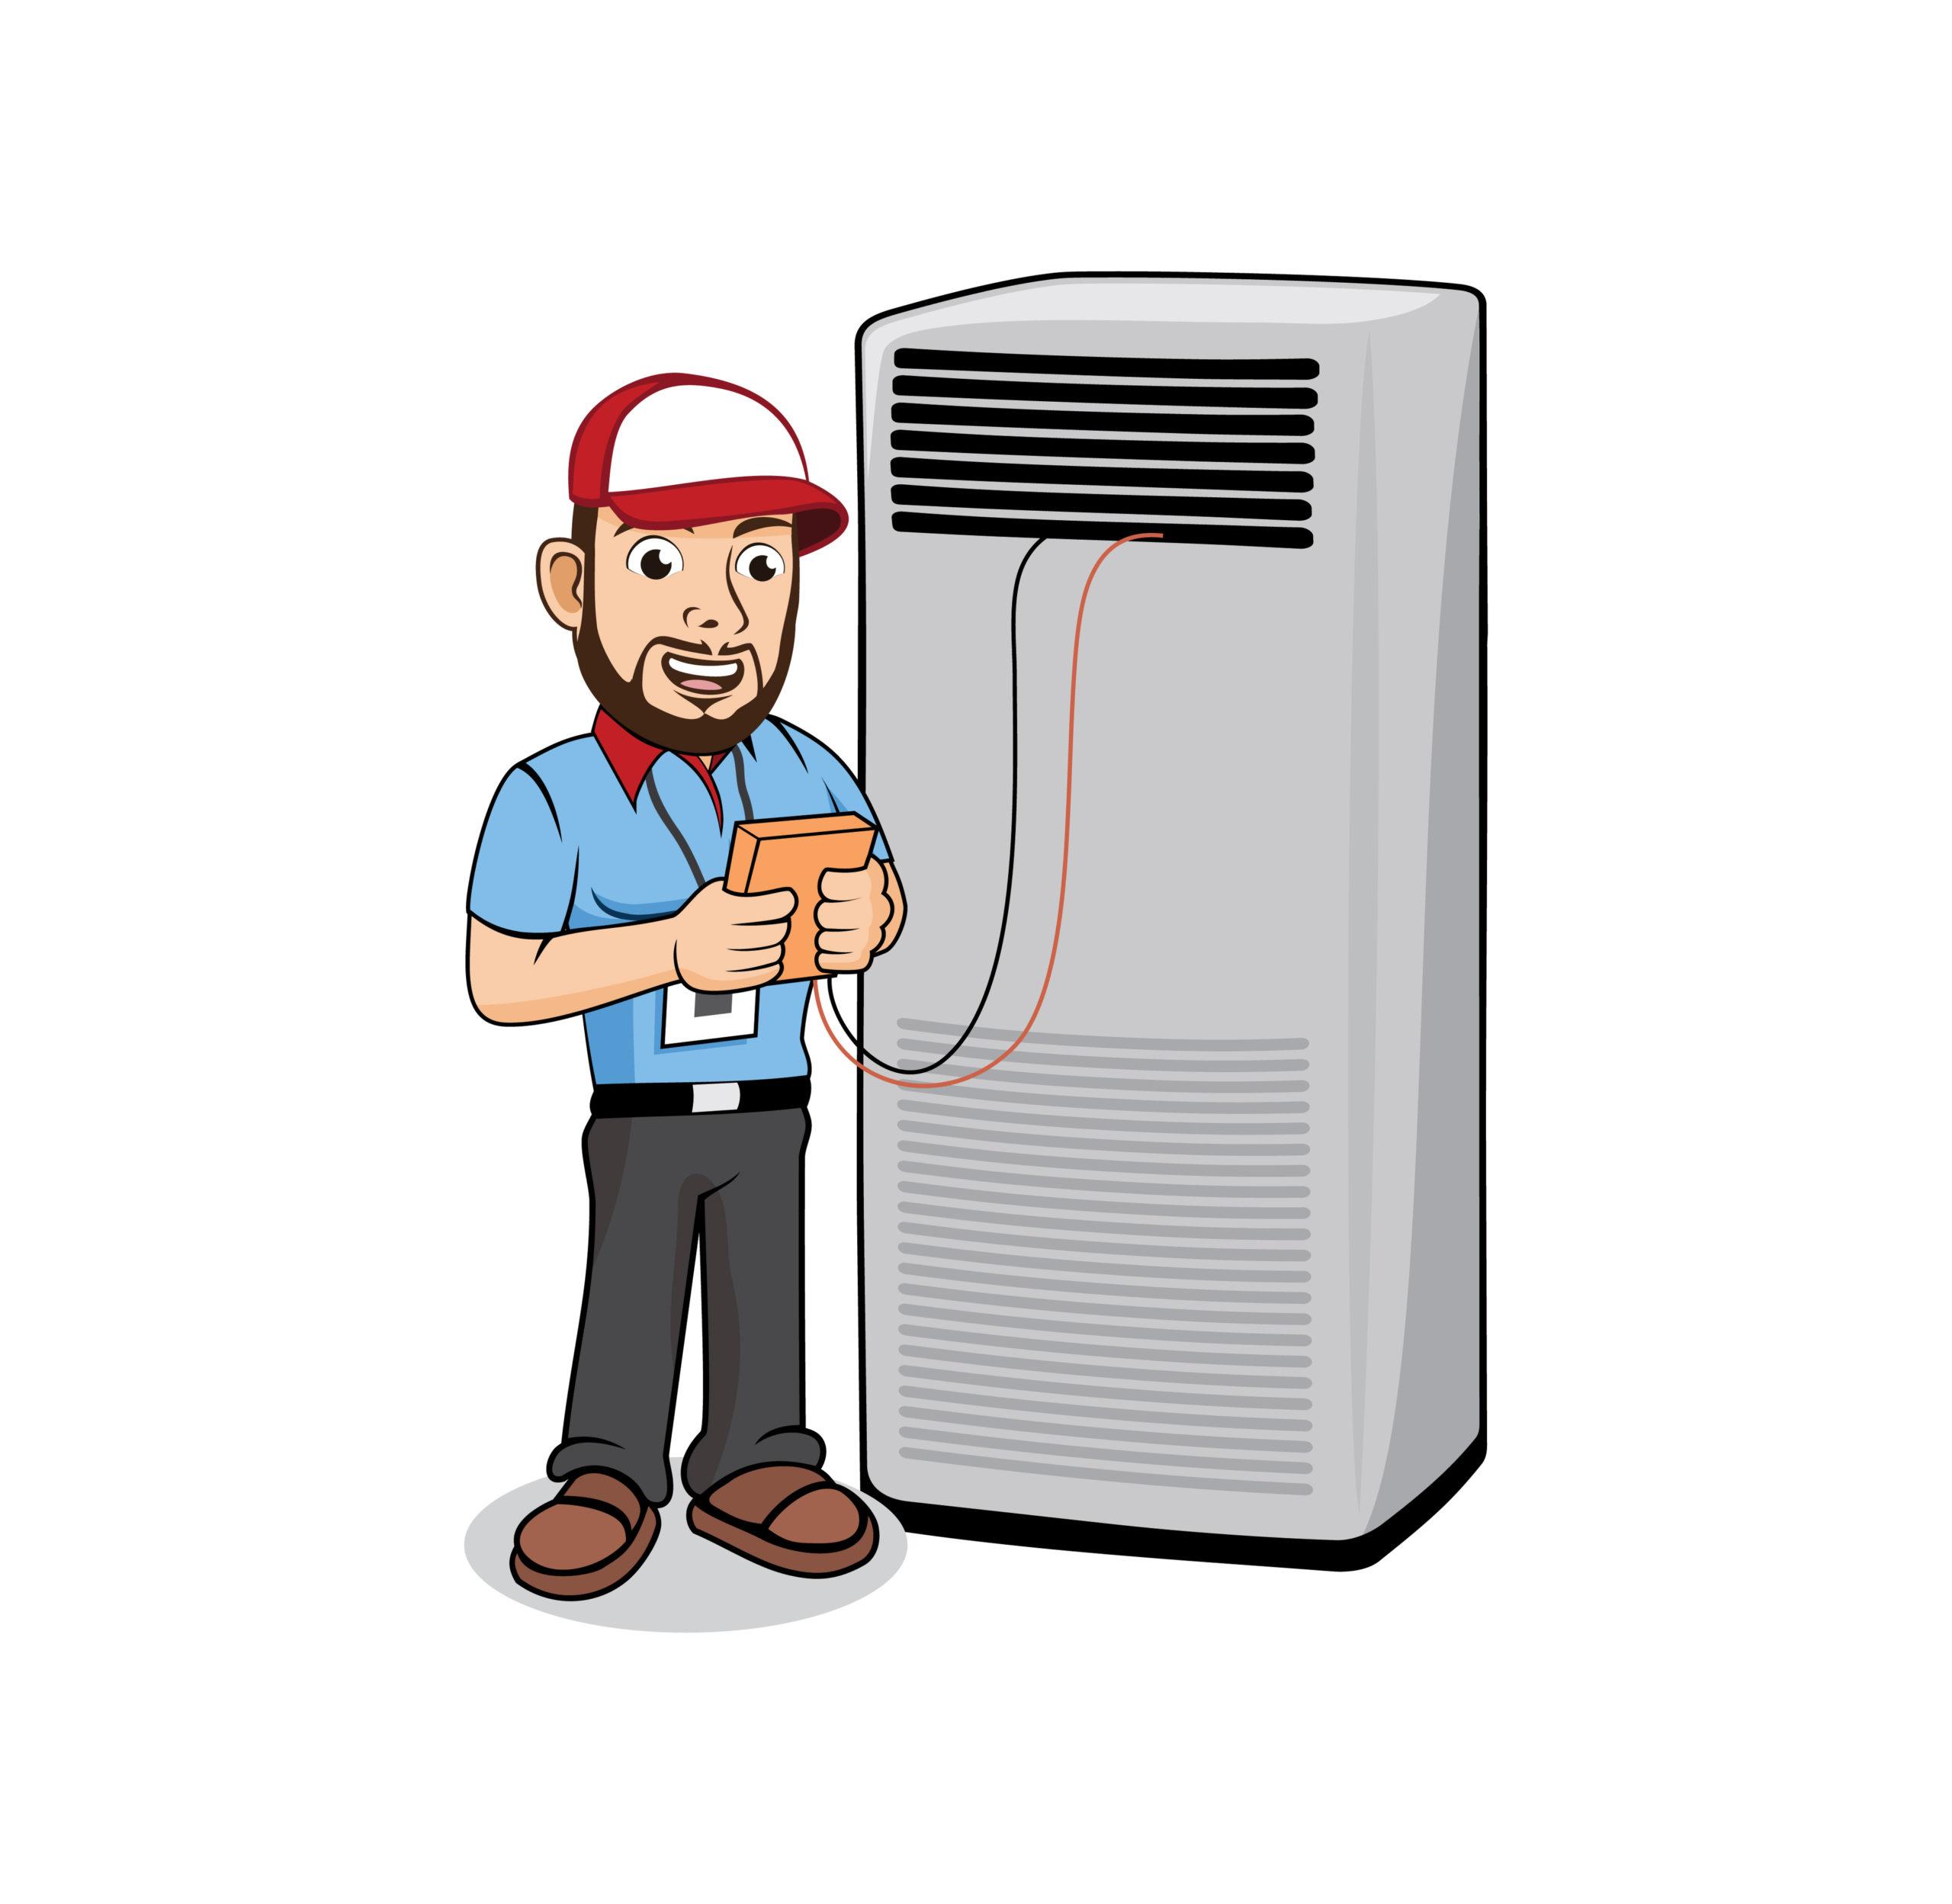 HVAC service cartoon character illustration